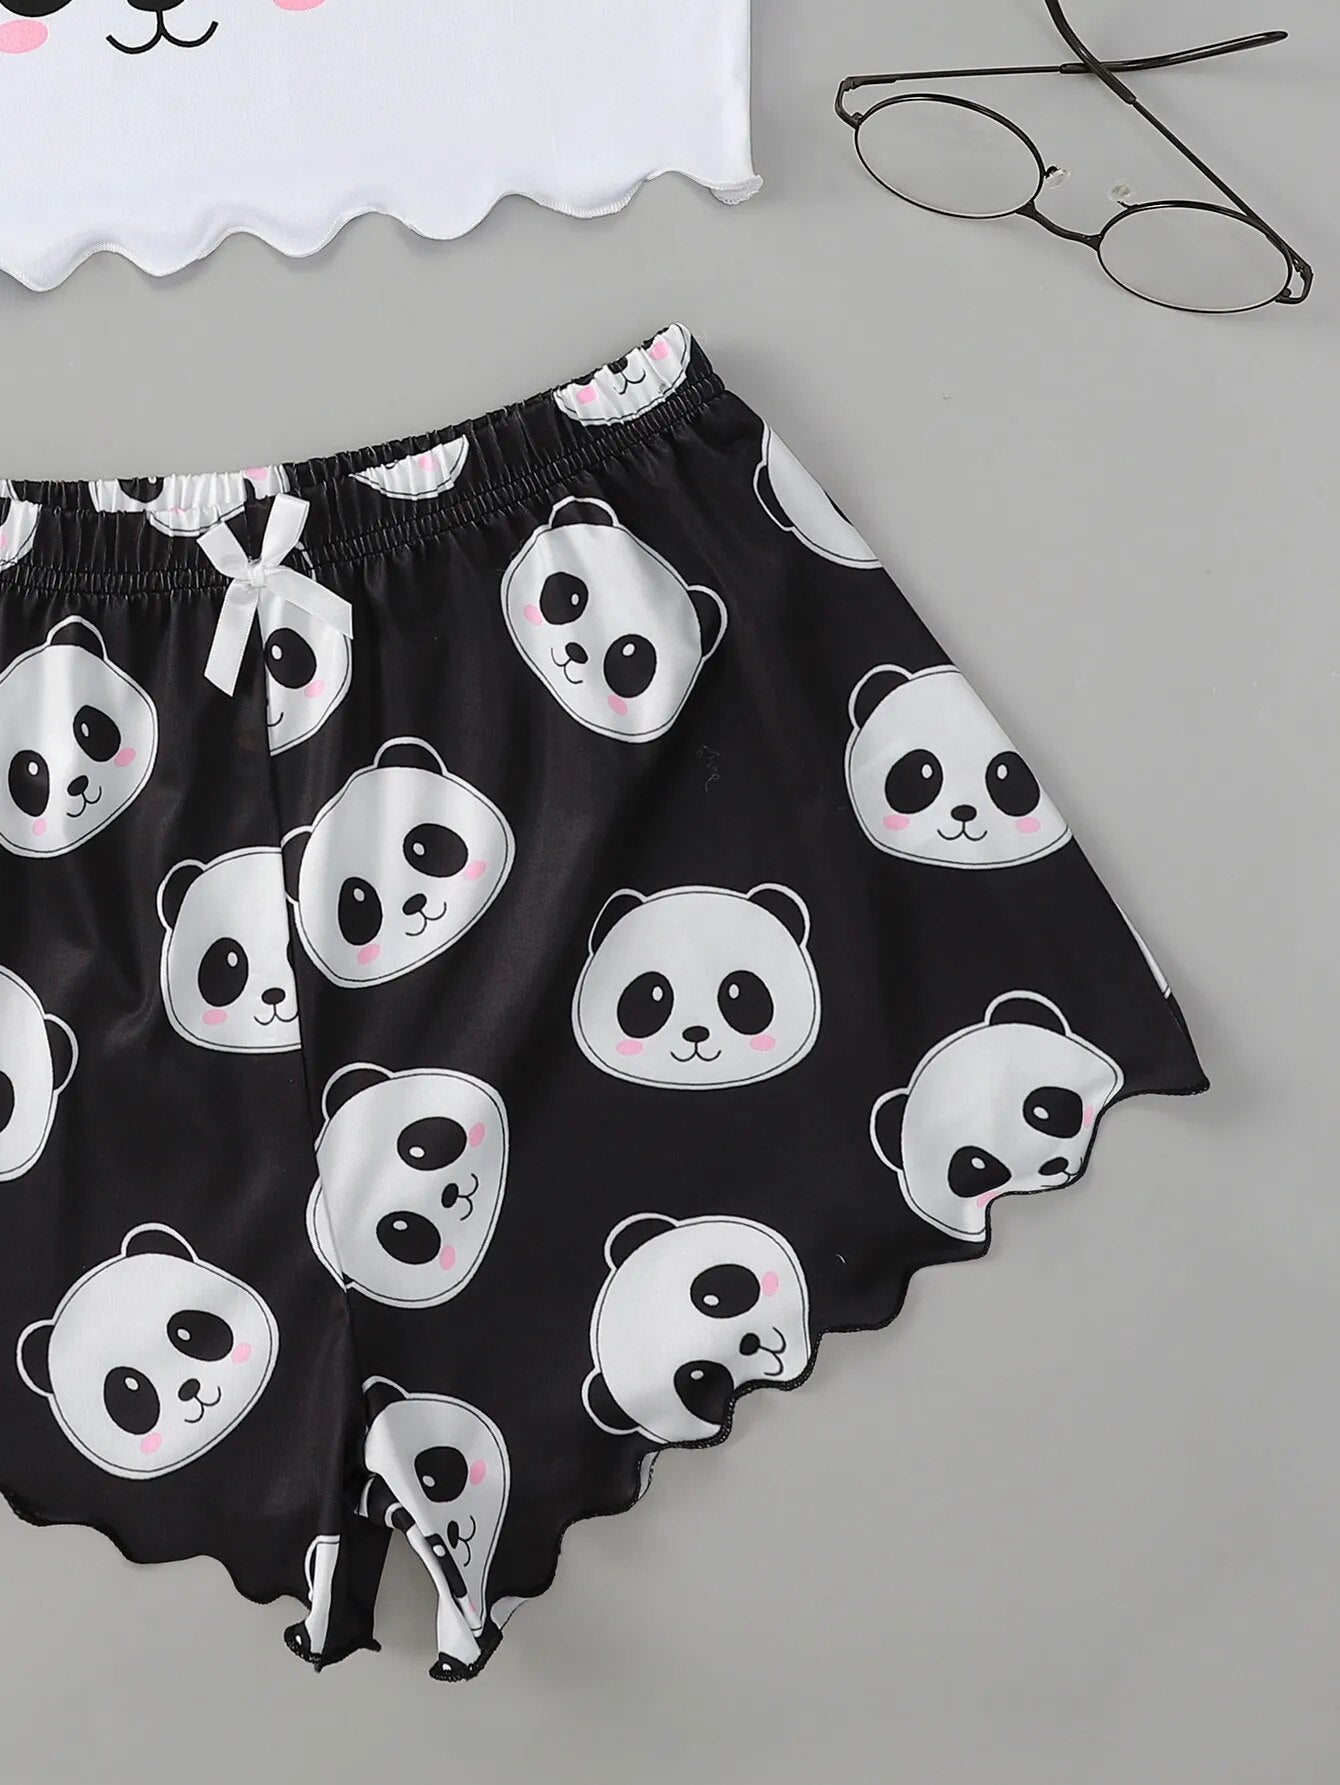 Cute Panda Pajama Set